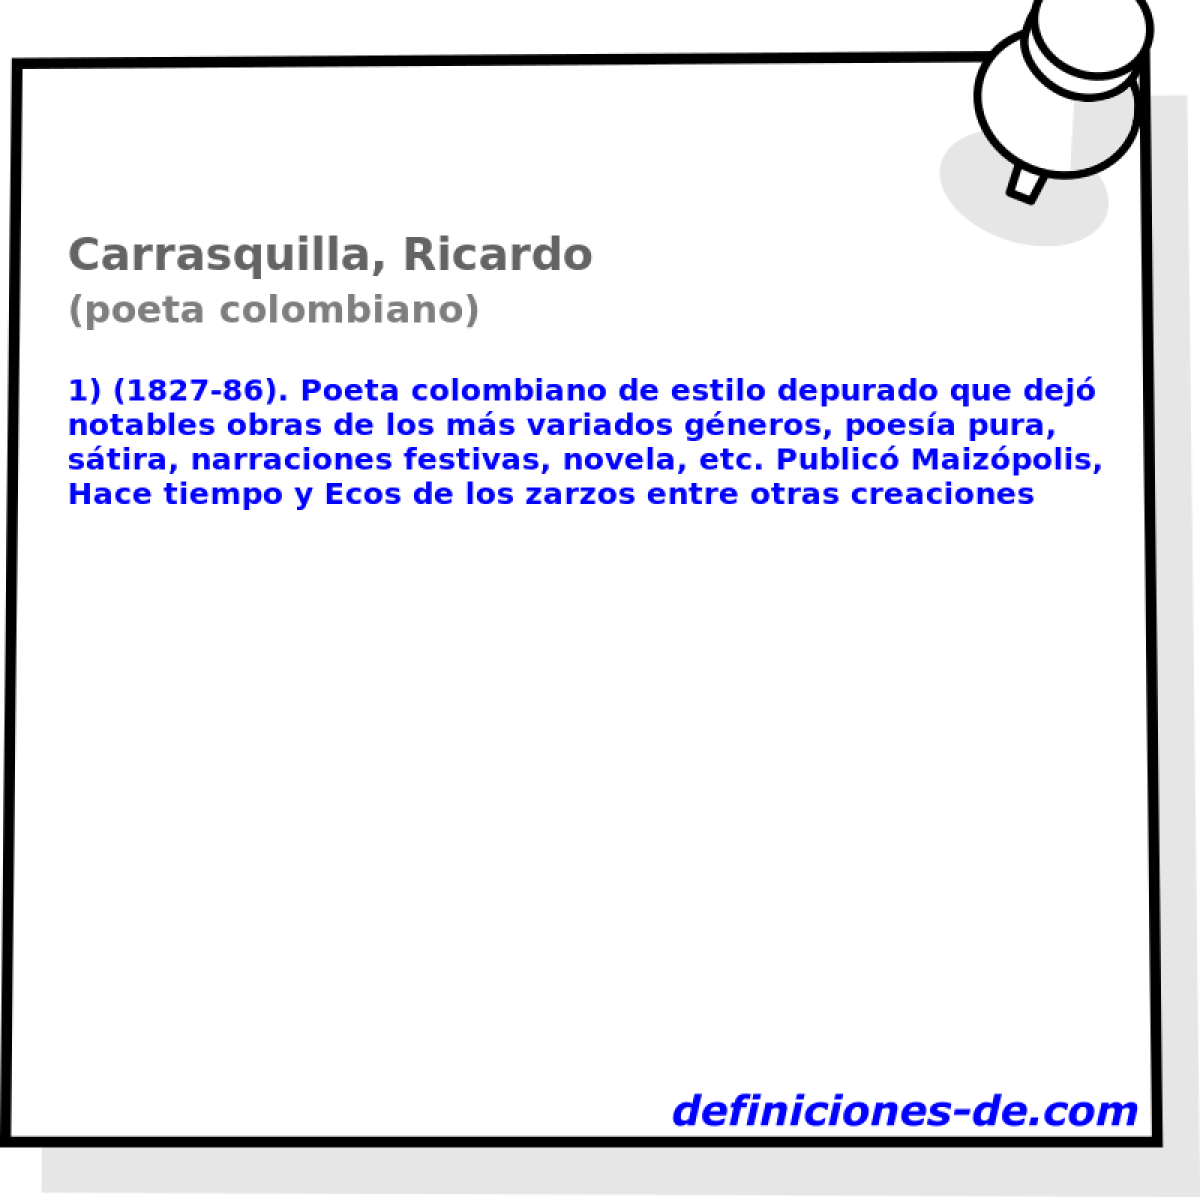 Carrasquilla, Ricardo (poeta colombiano)